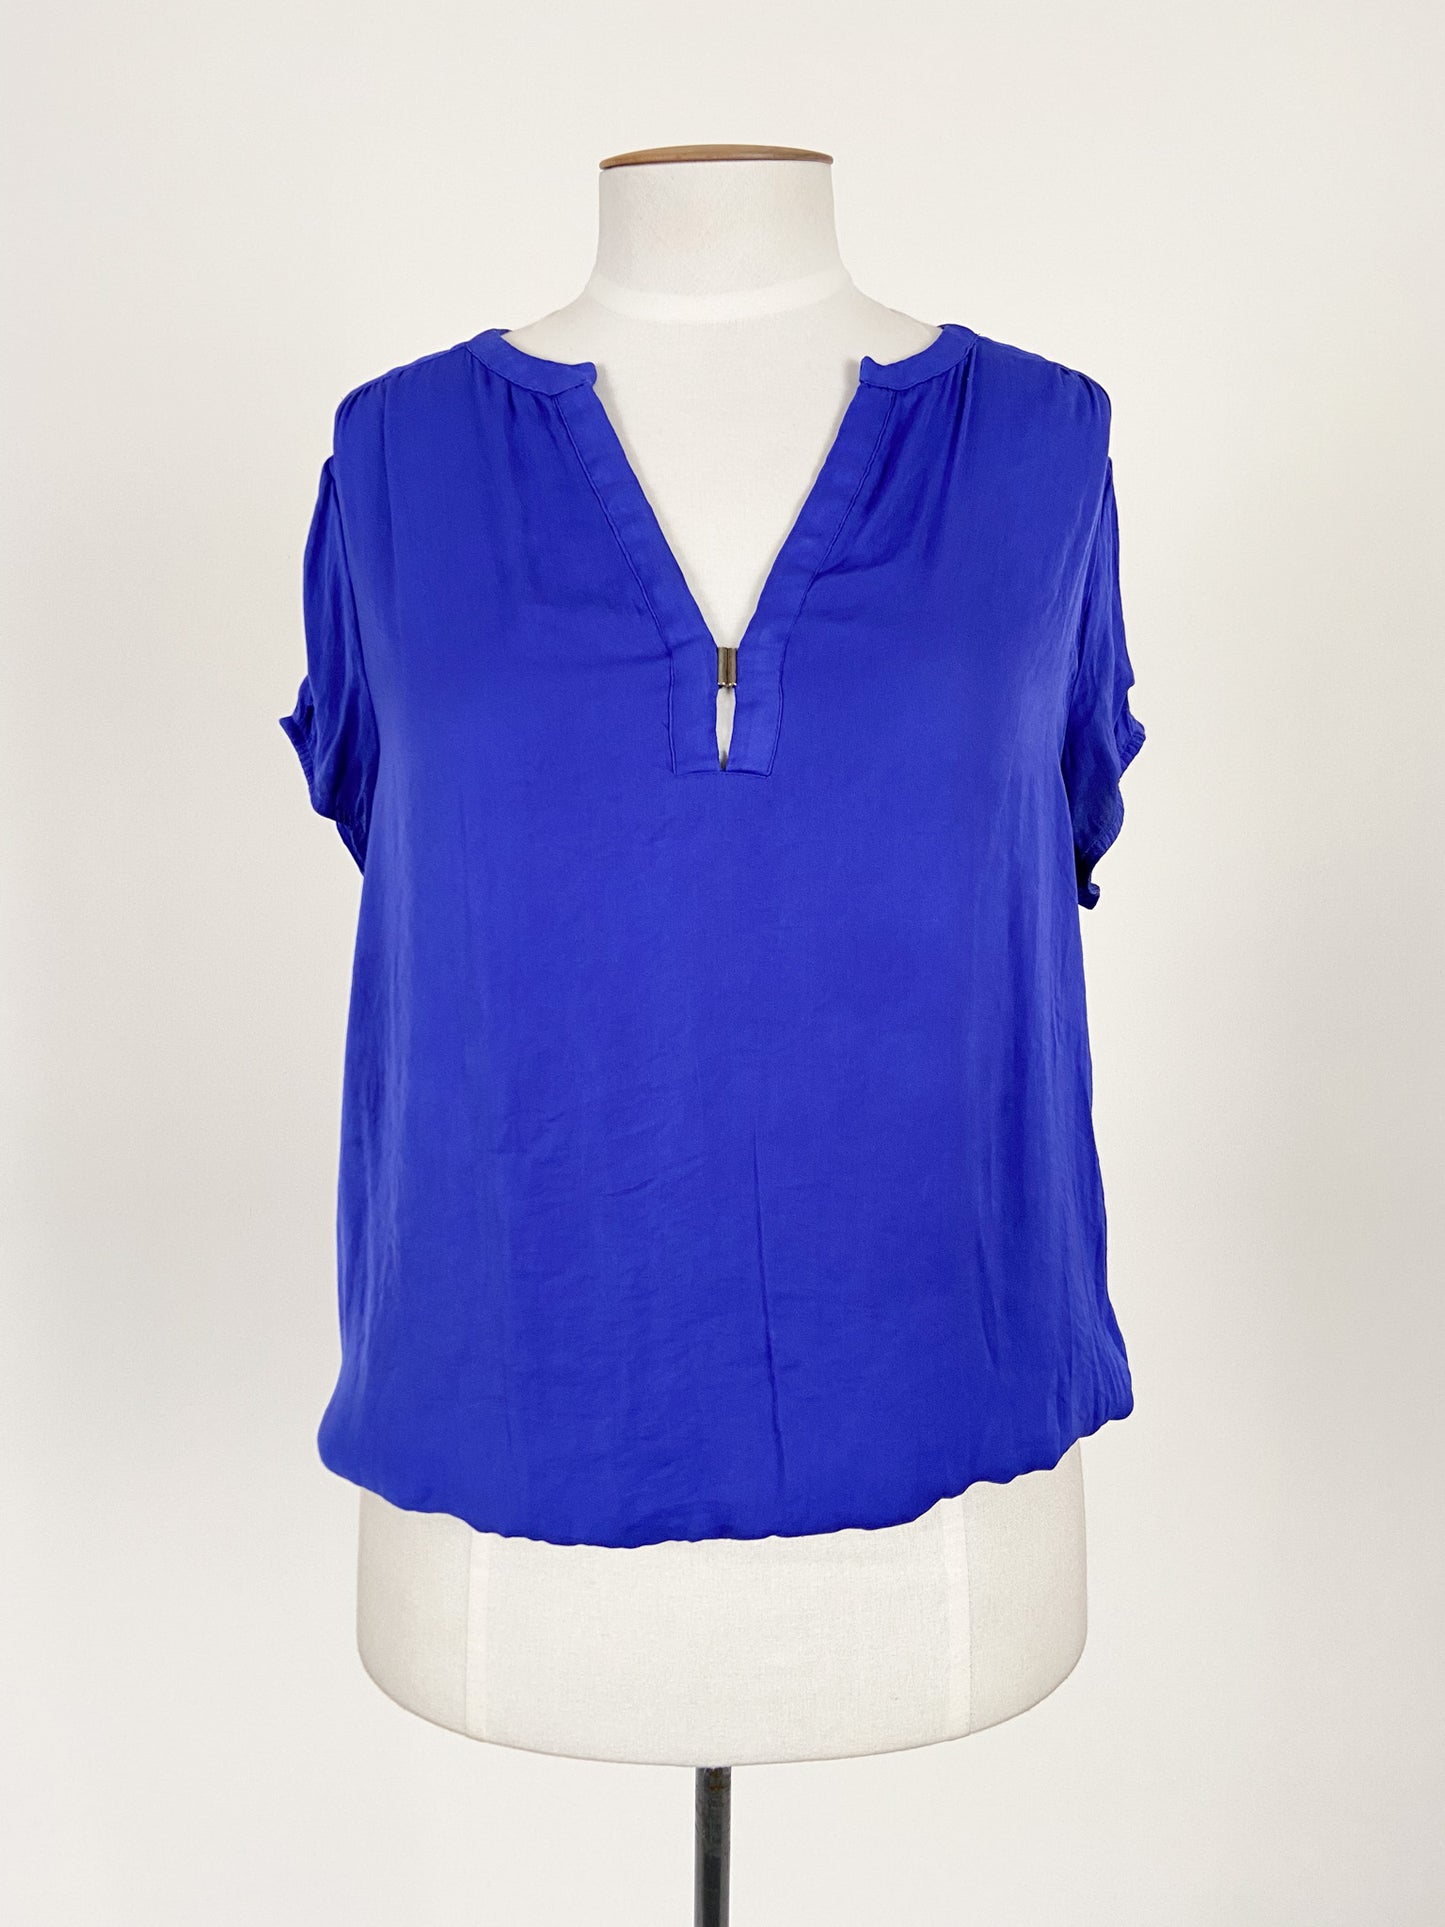 Zara | Blue Casual/Workwear Top | Size XL